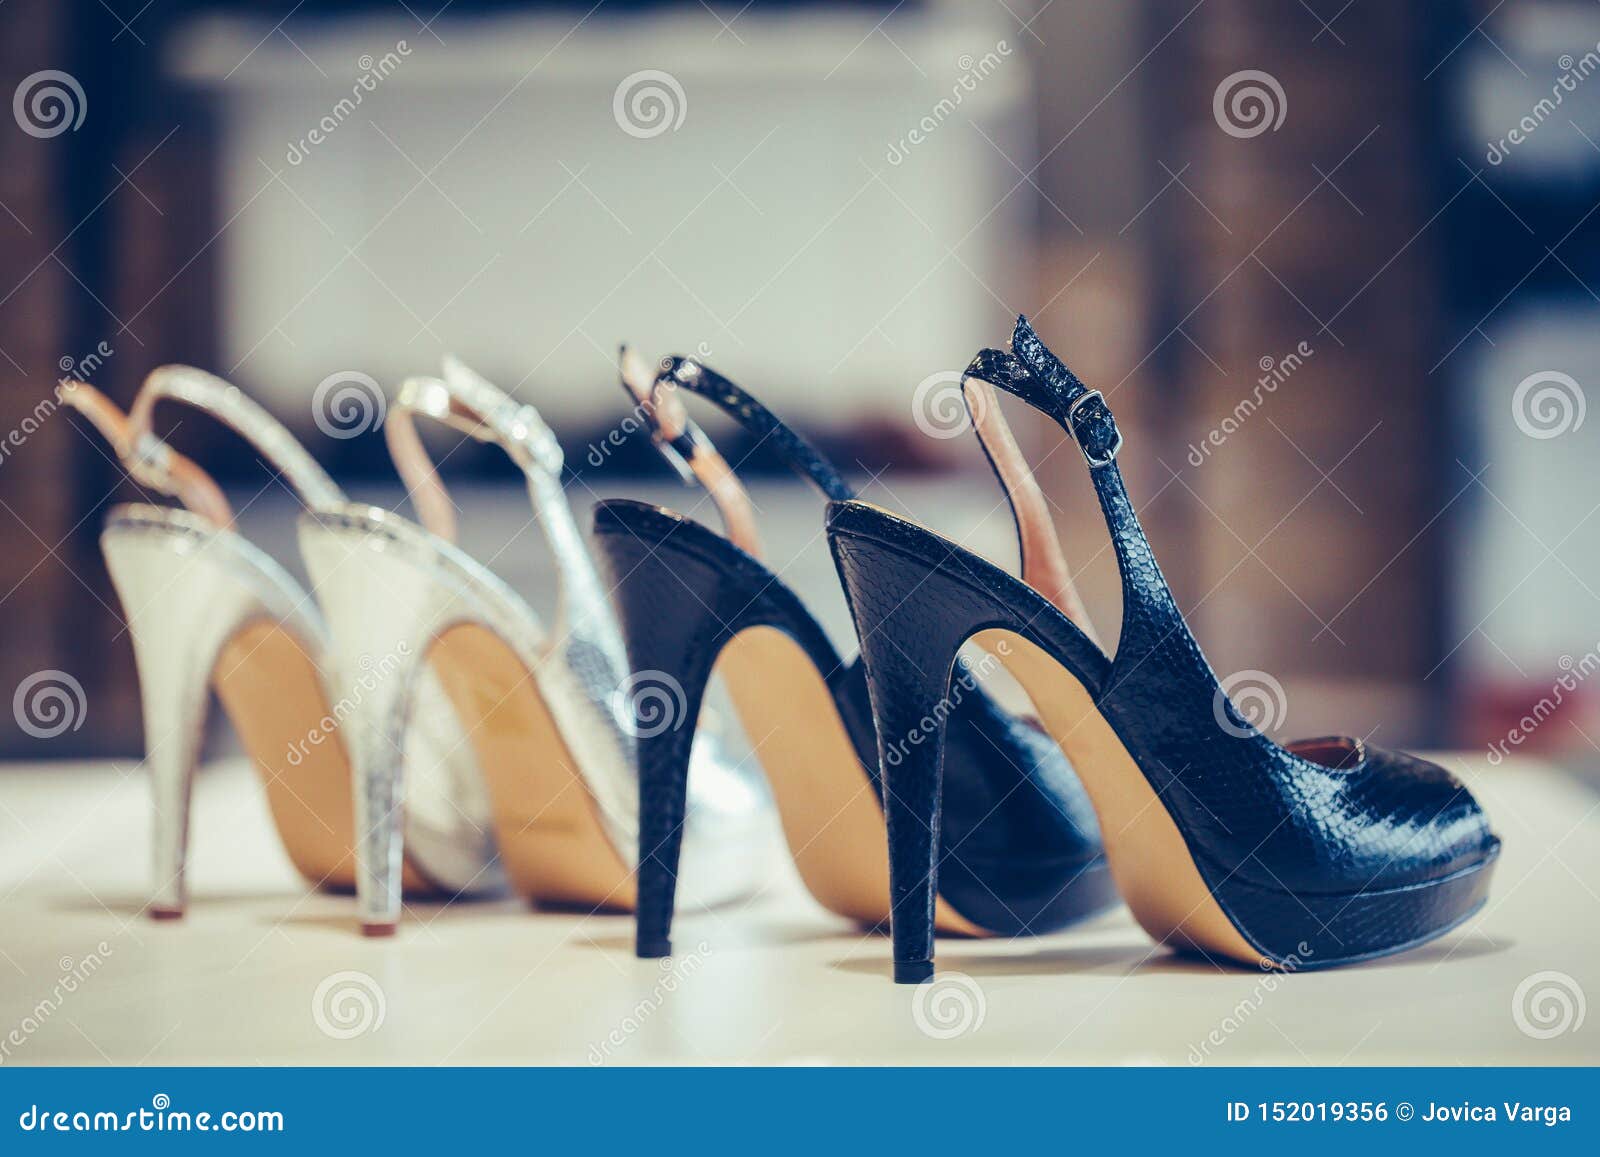 Ladies Platform Clear High Heels Sandals Open Toe Pvc Ankle Strap Shoes  Party | eBay